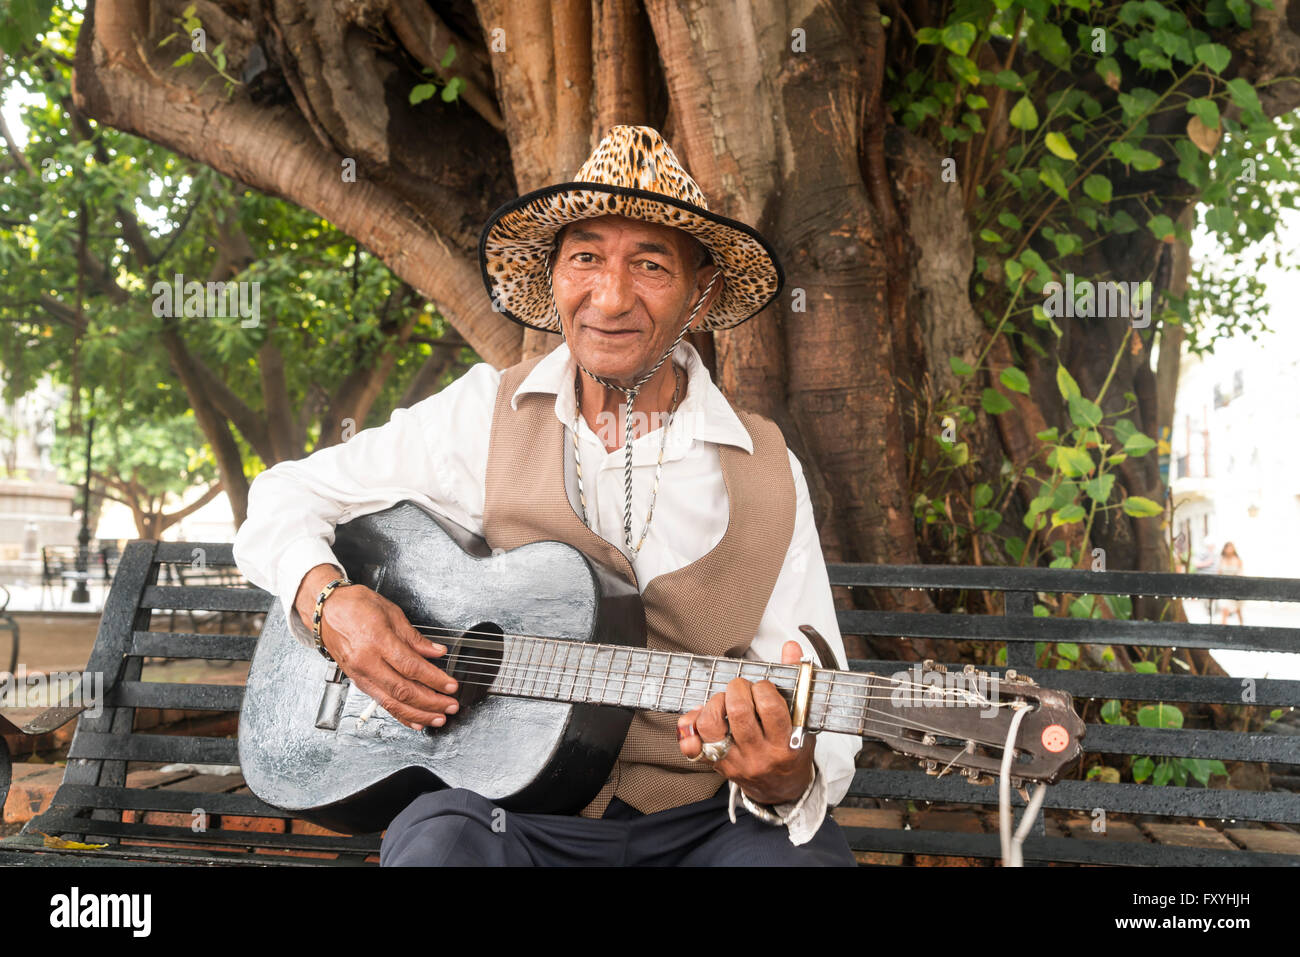 Street musician with guitar, Santo Domingo, Dominican Republic Stock Photo